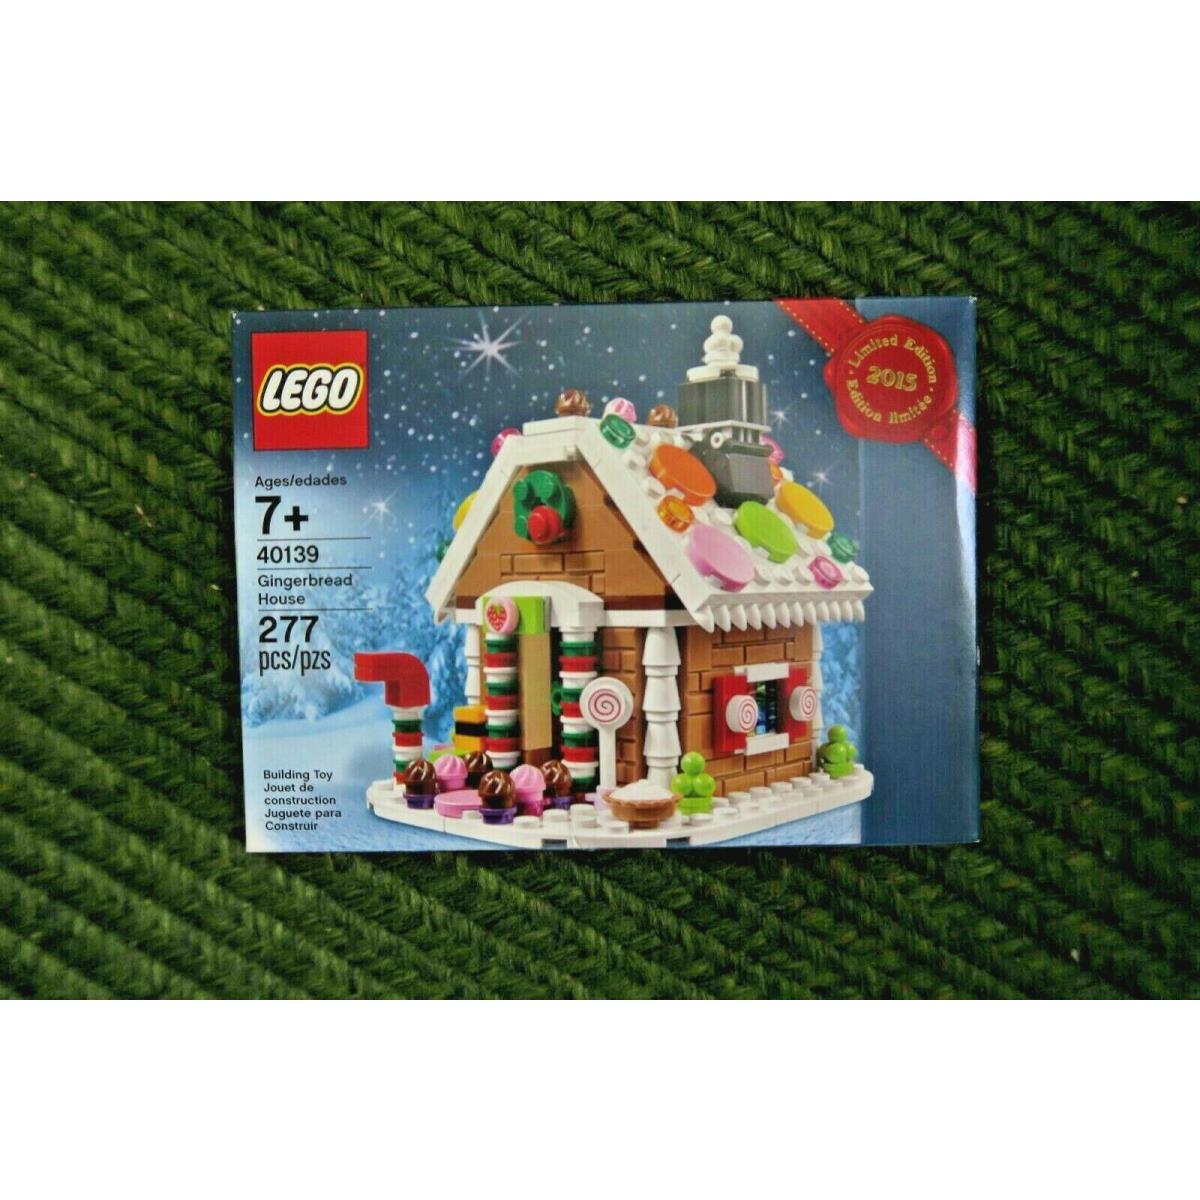 Limited Edition Lego Gingerbread House 40139 - Holiday Seasonal Chrismas